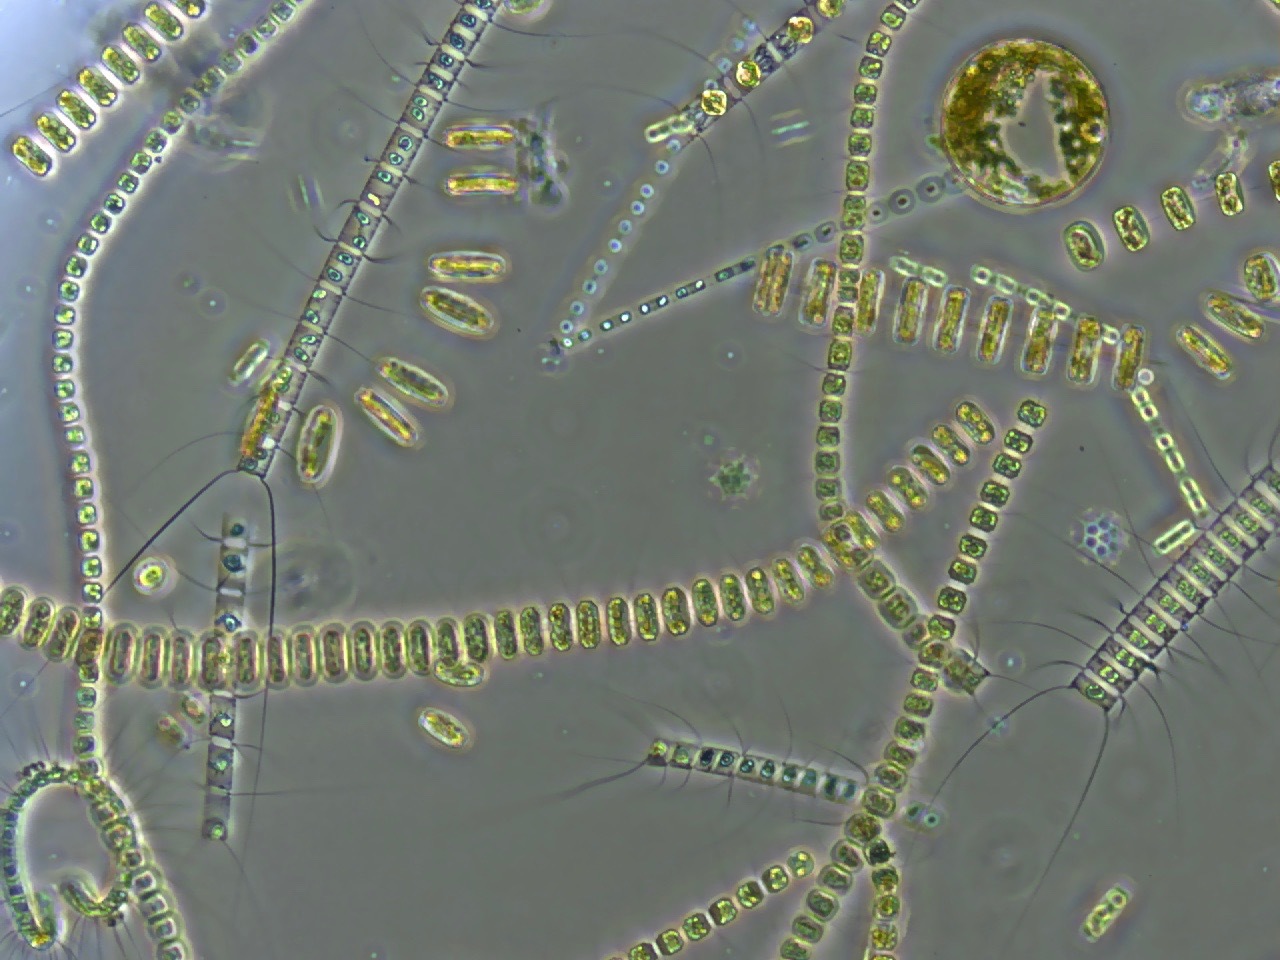 Living planktonic marine diatoms